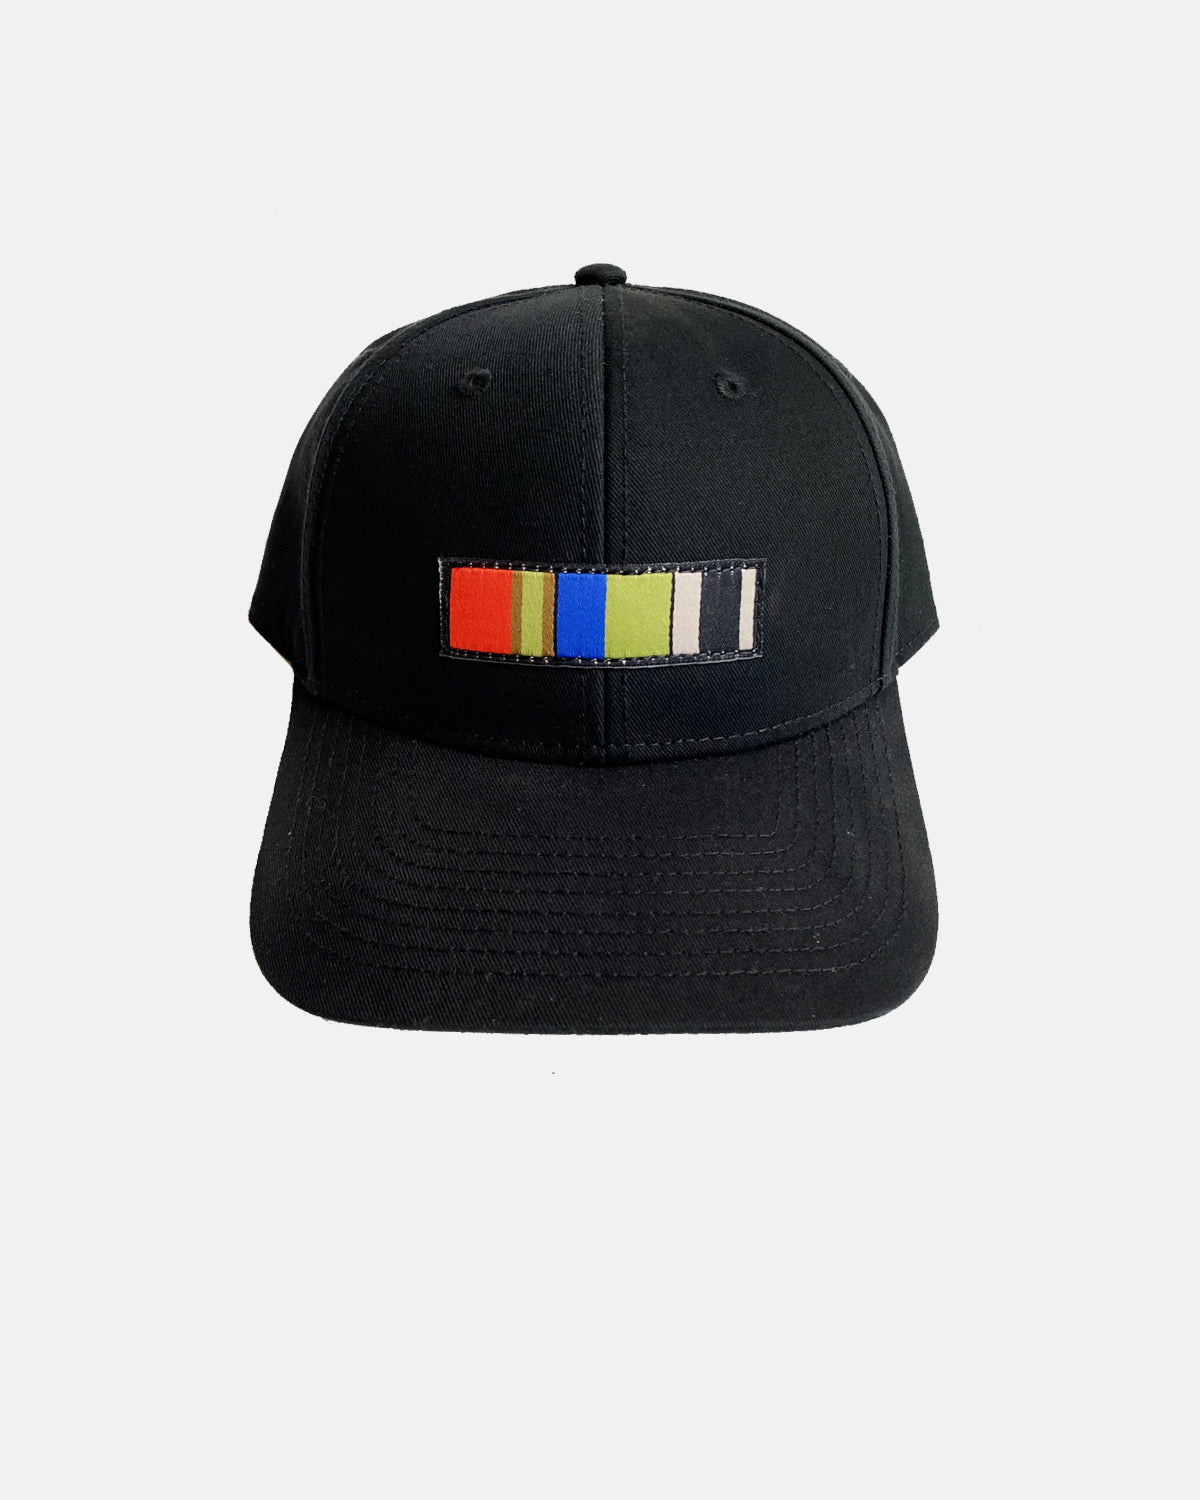 Holloman color code black hat